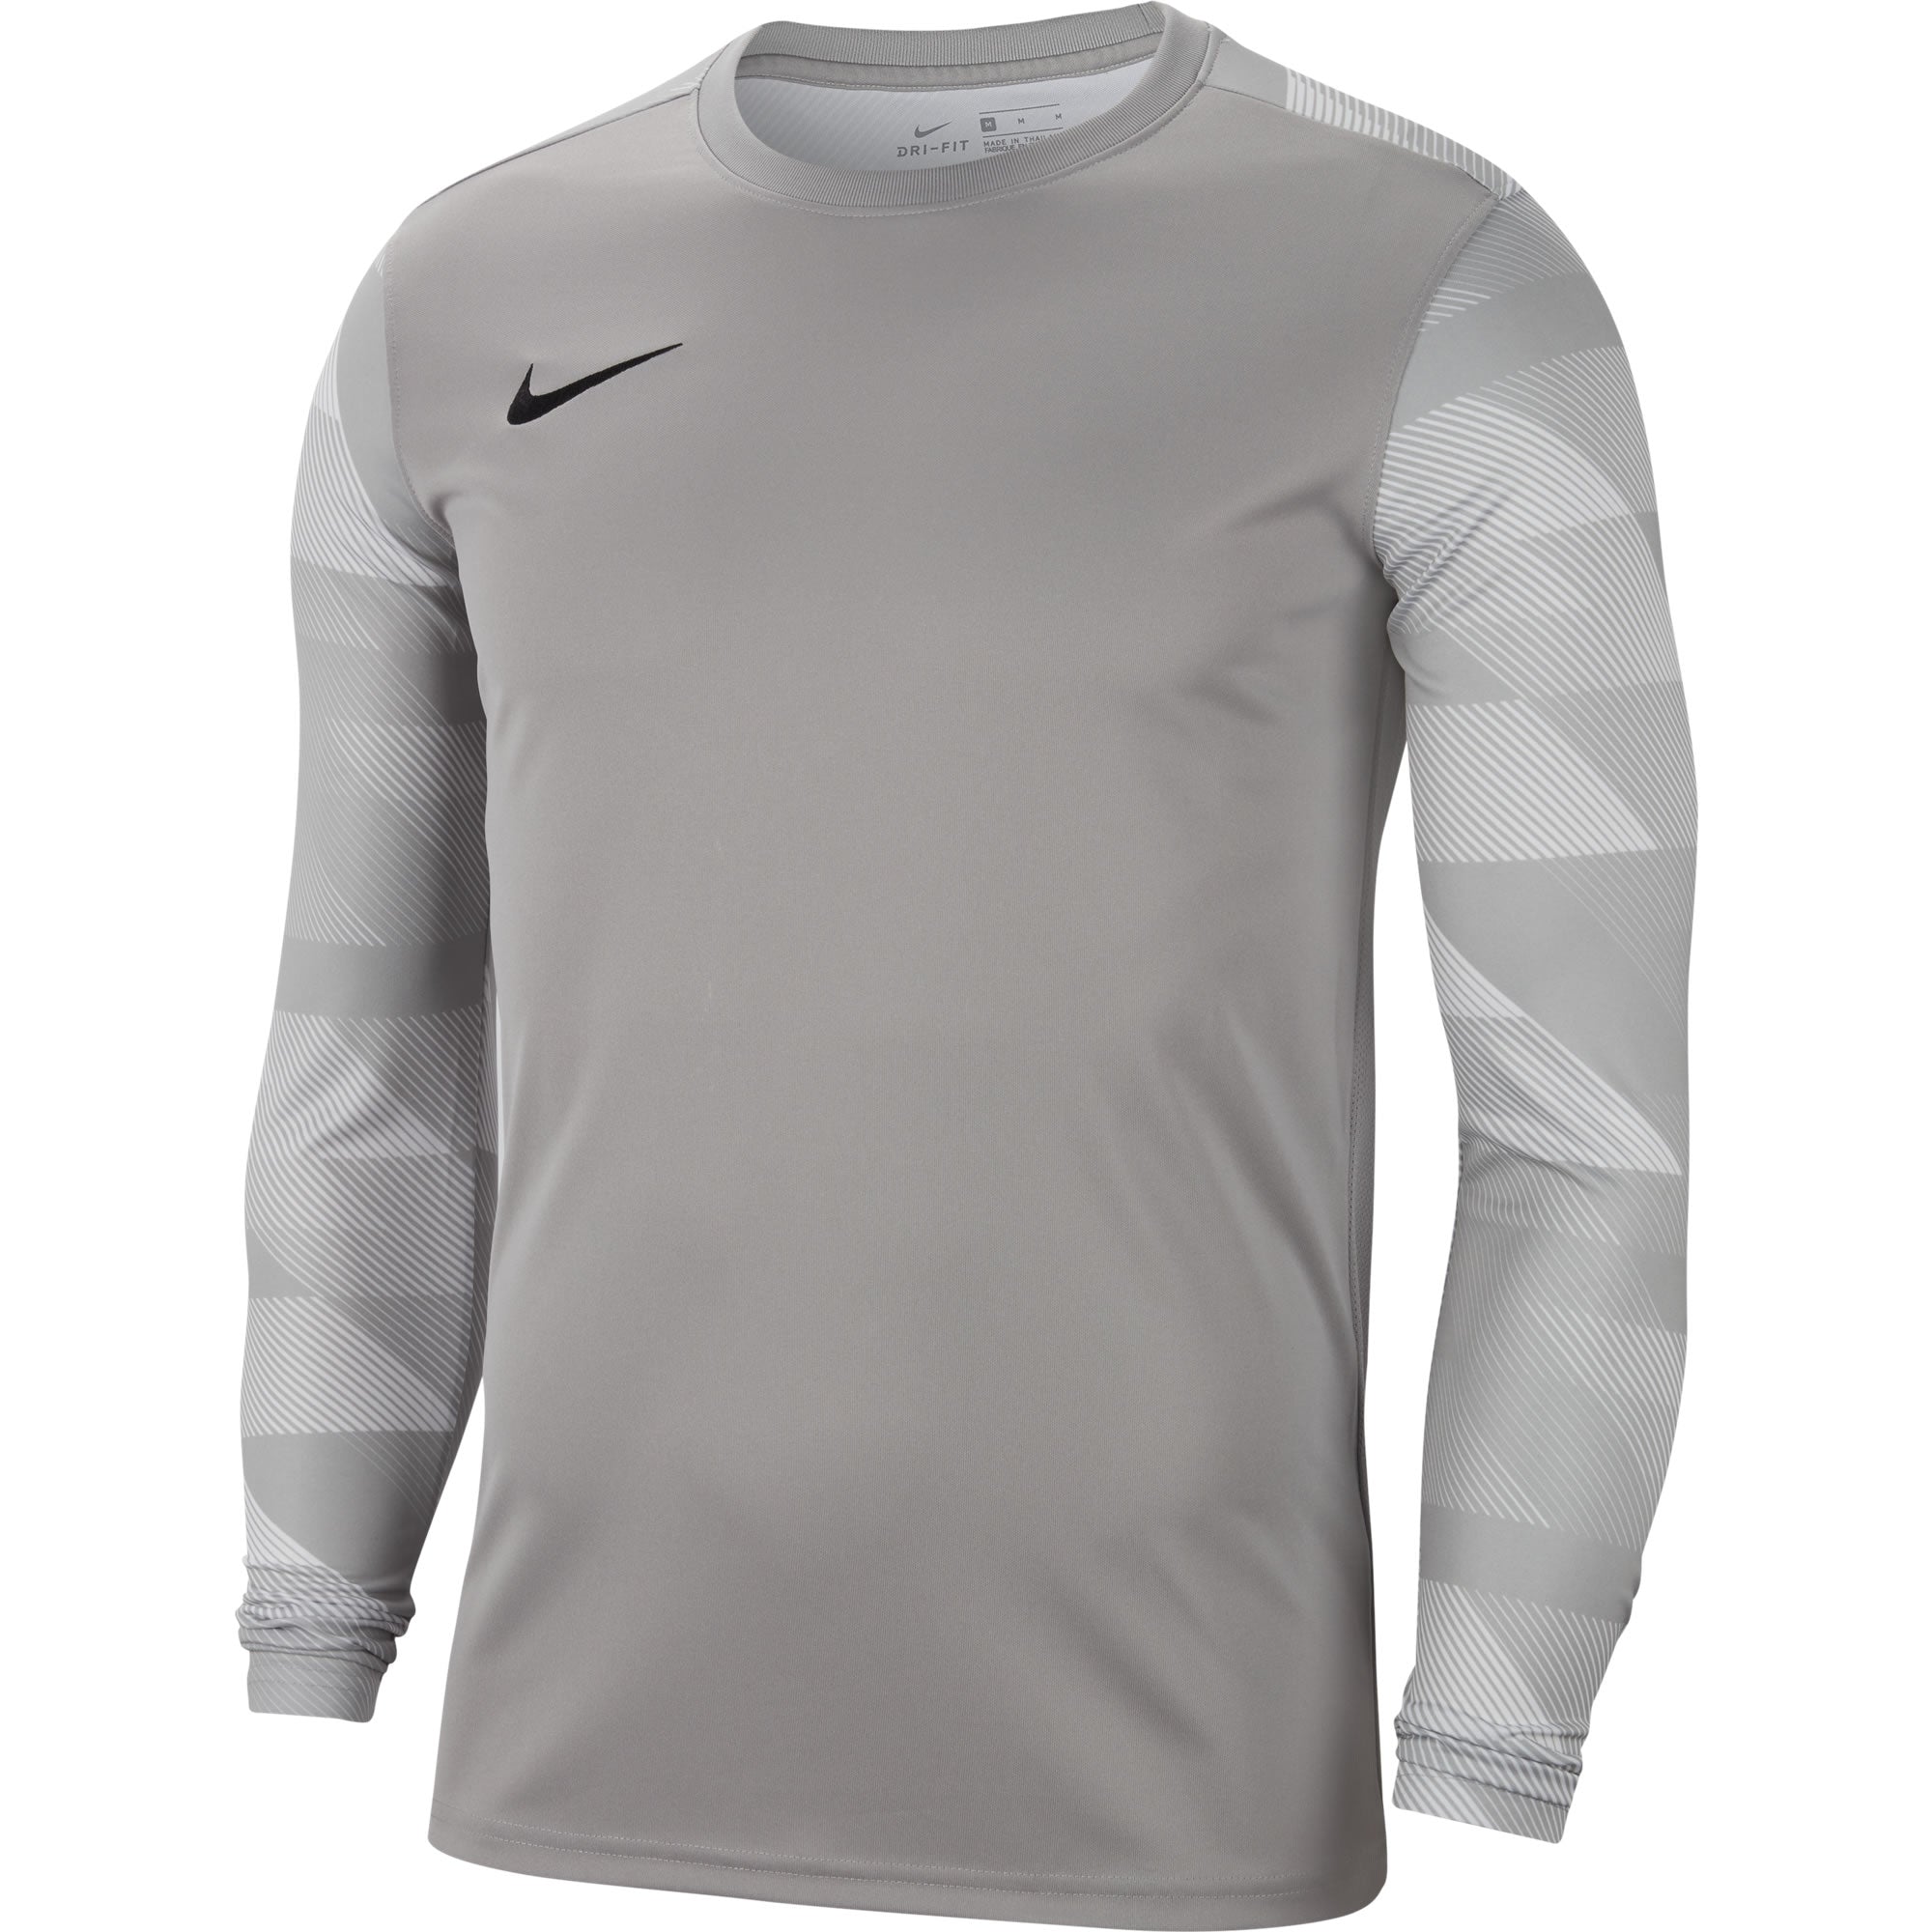 Nike Striker IV LS Jersey - Mens Football Teamwear -  Black/Black/White/White